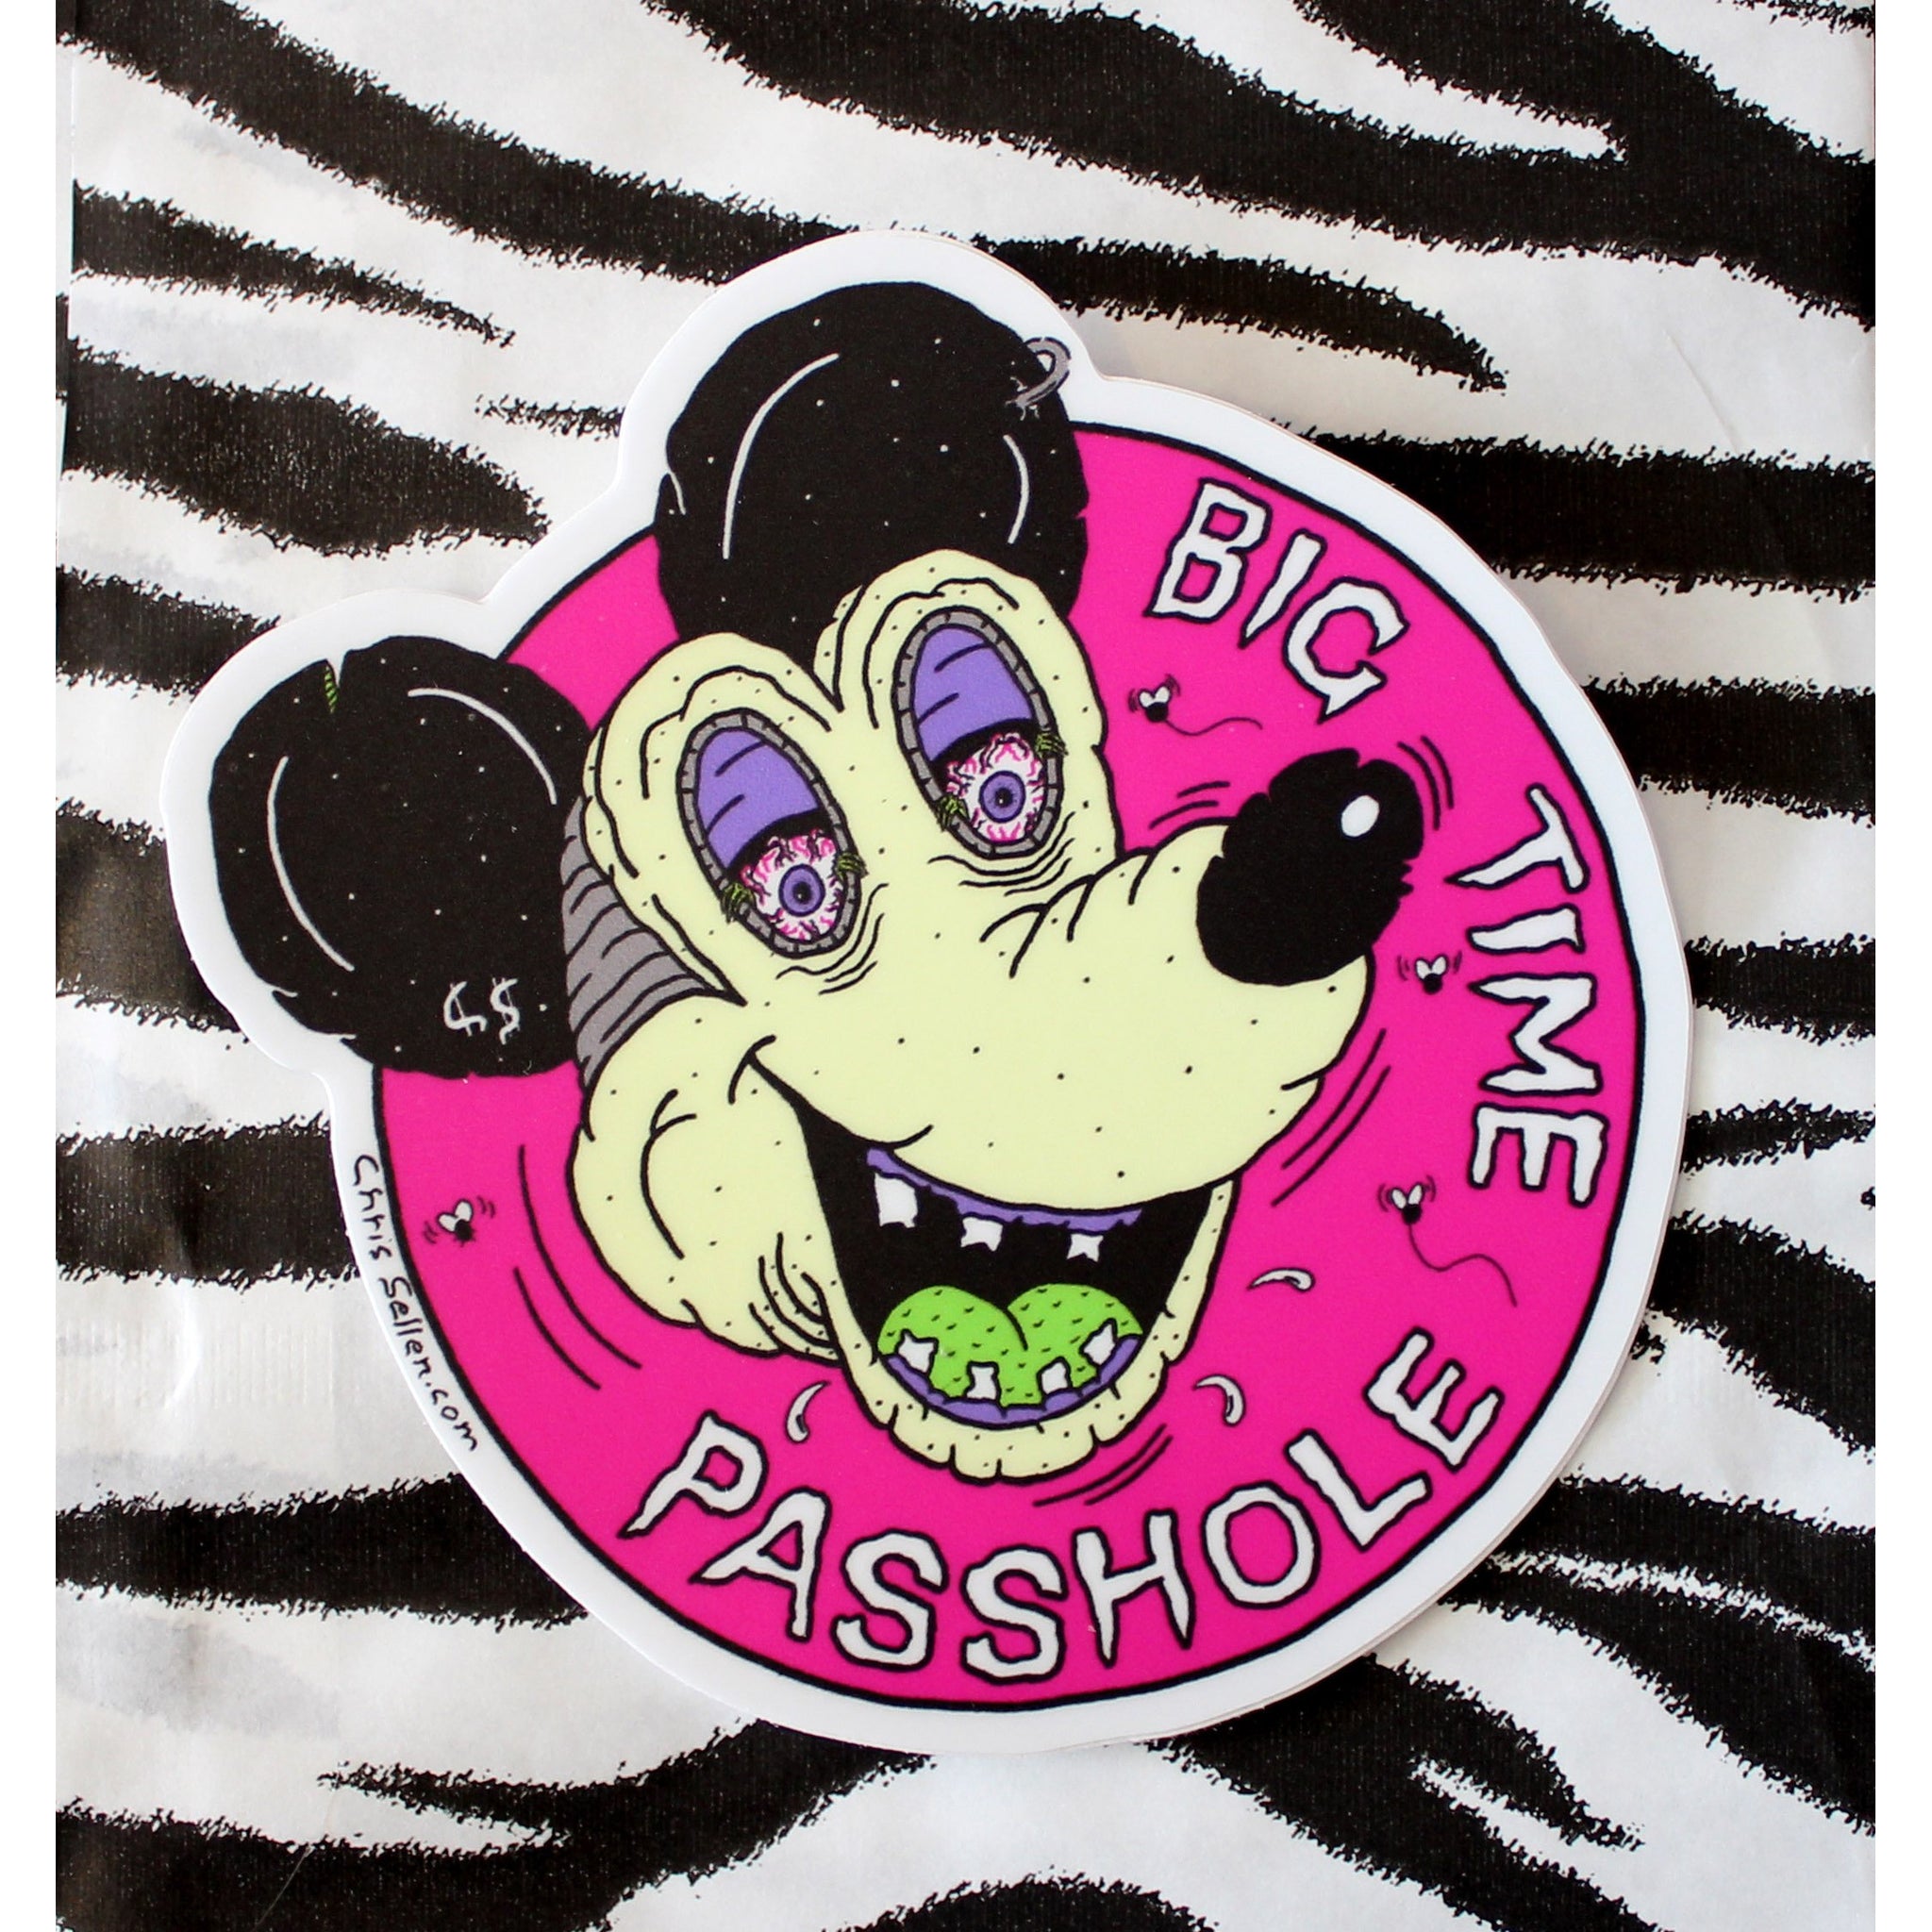 Big Time Passhole- Sticker